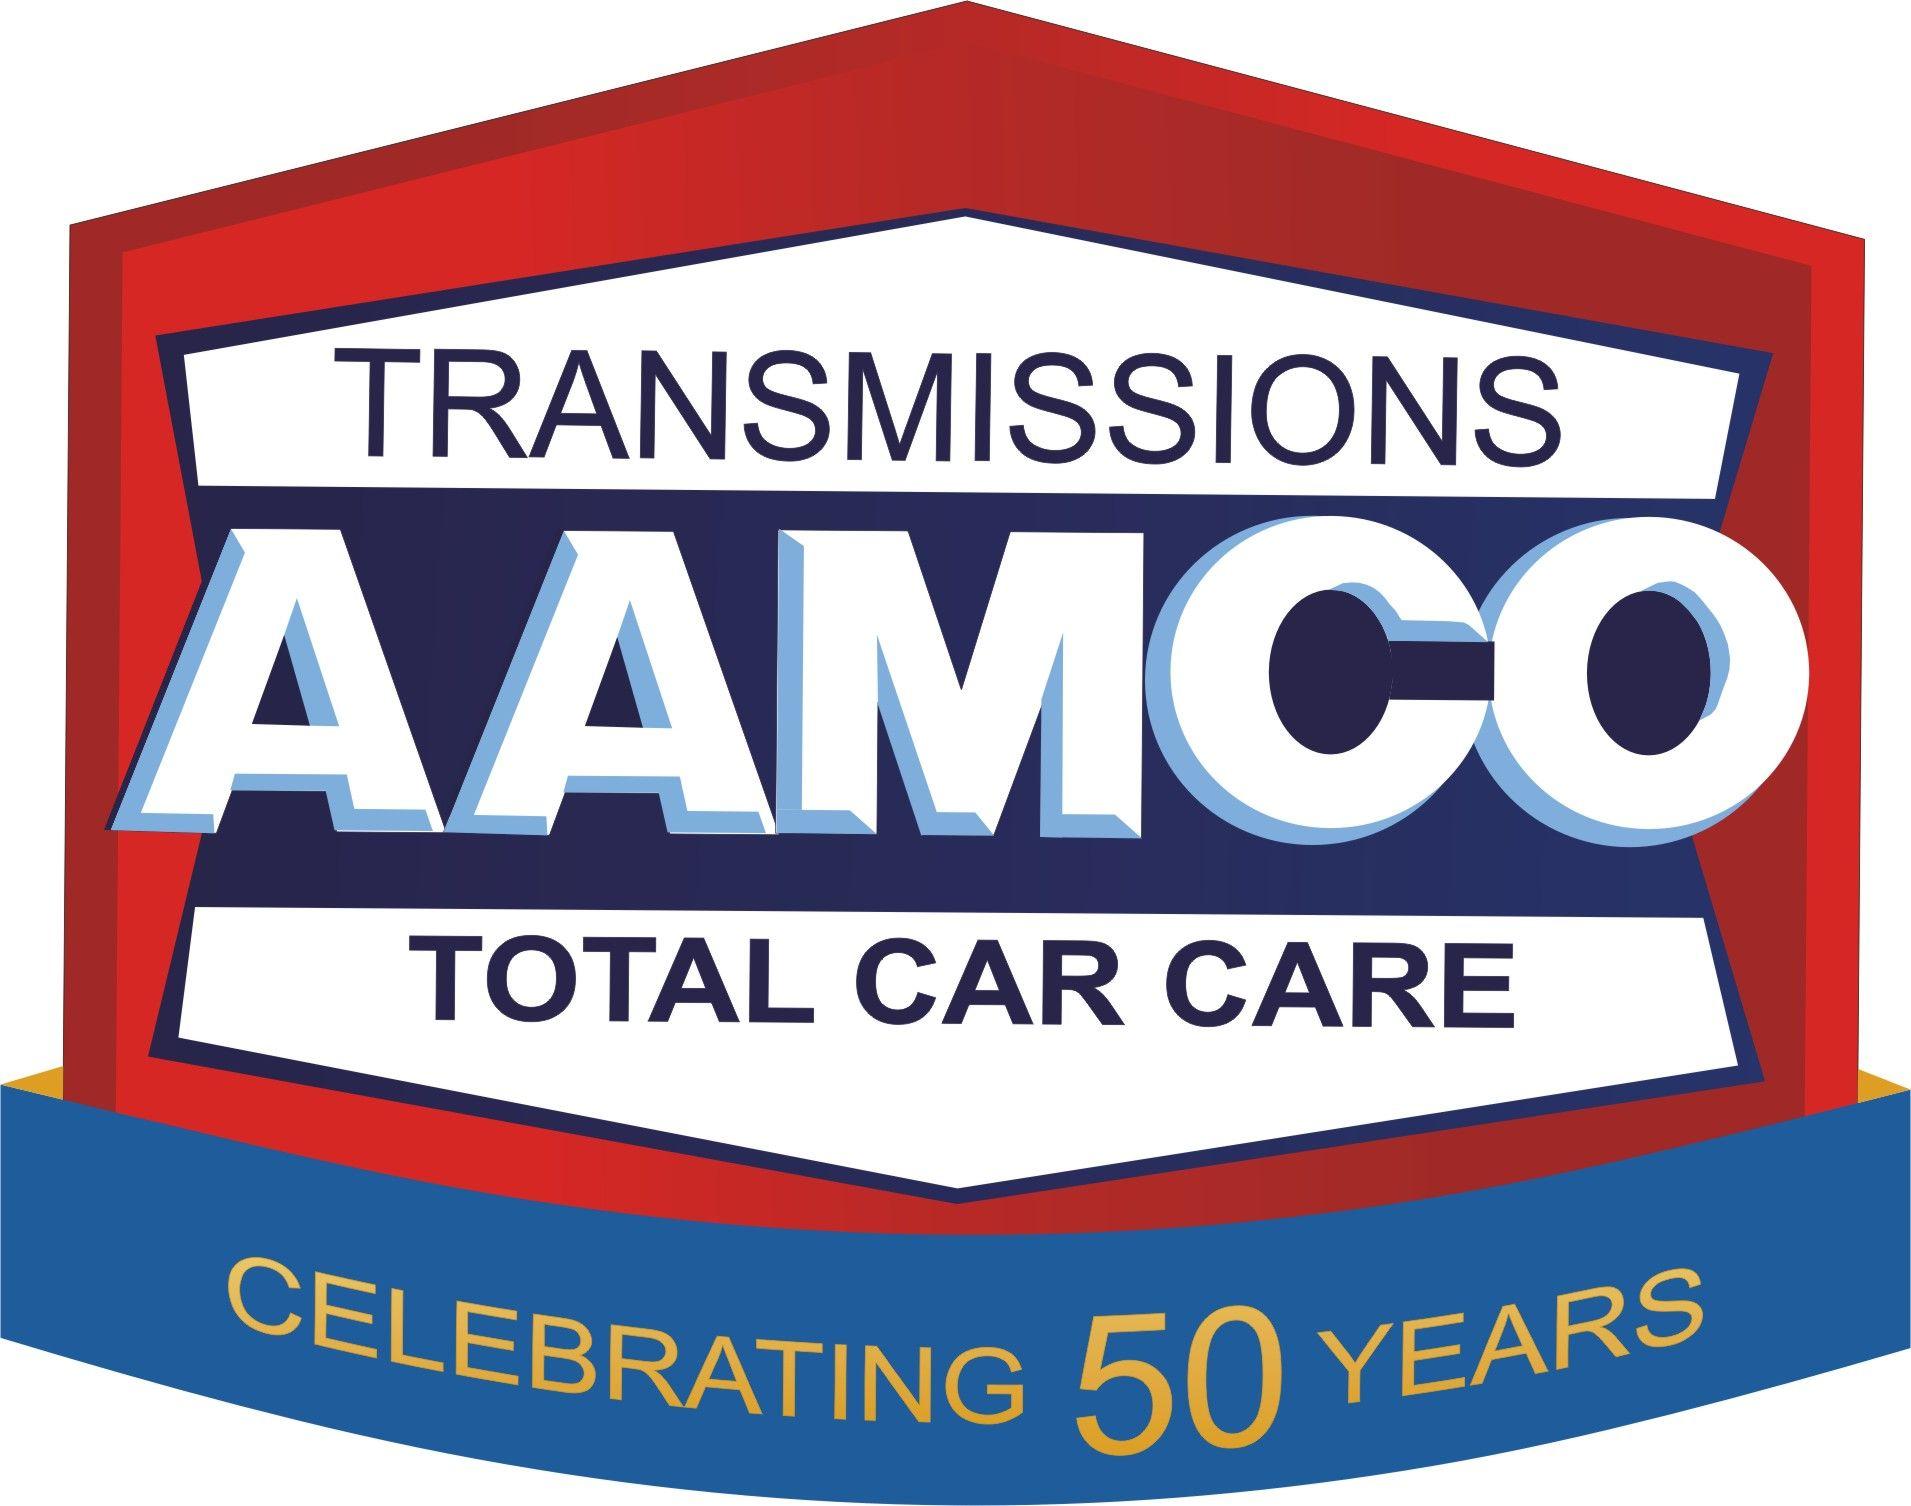 AAMCO Logo - Blog Veteran Hiring Made Easy at Military Job Networks